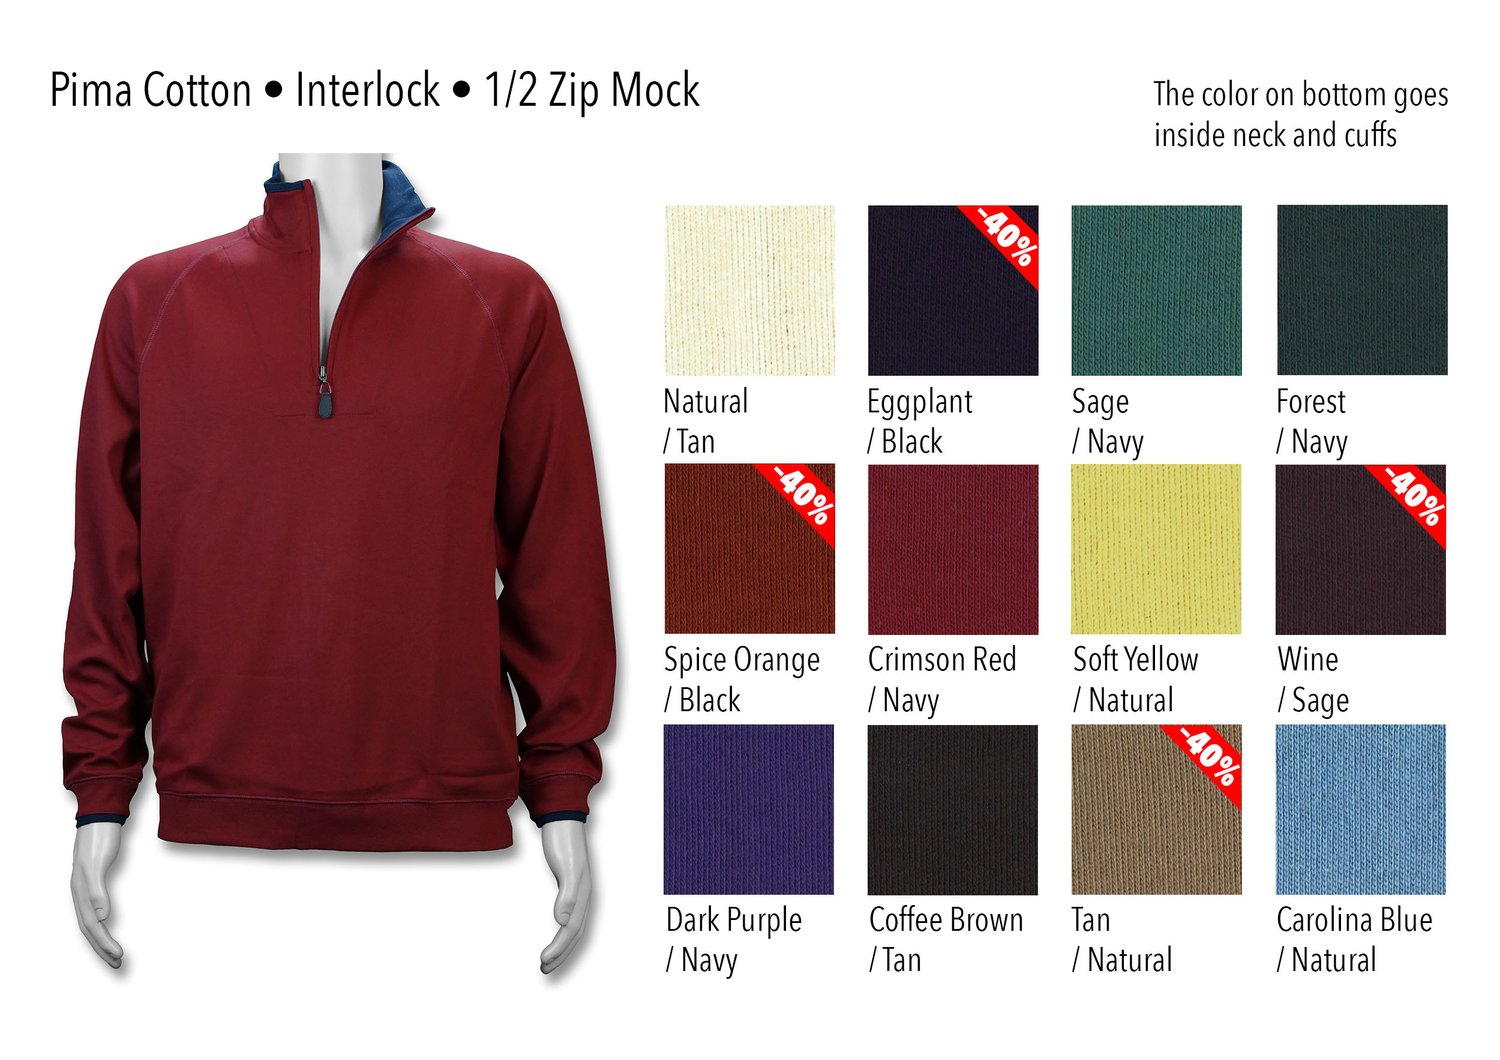 Interlock Half Zip Mock (Classic Fit) — 1/2 Zip Mock — Peru Unlimited Corp.